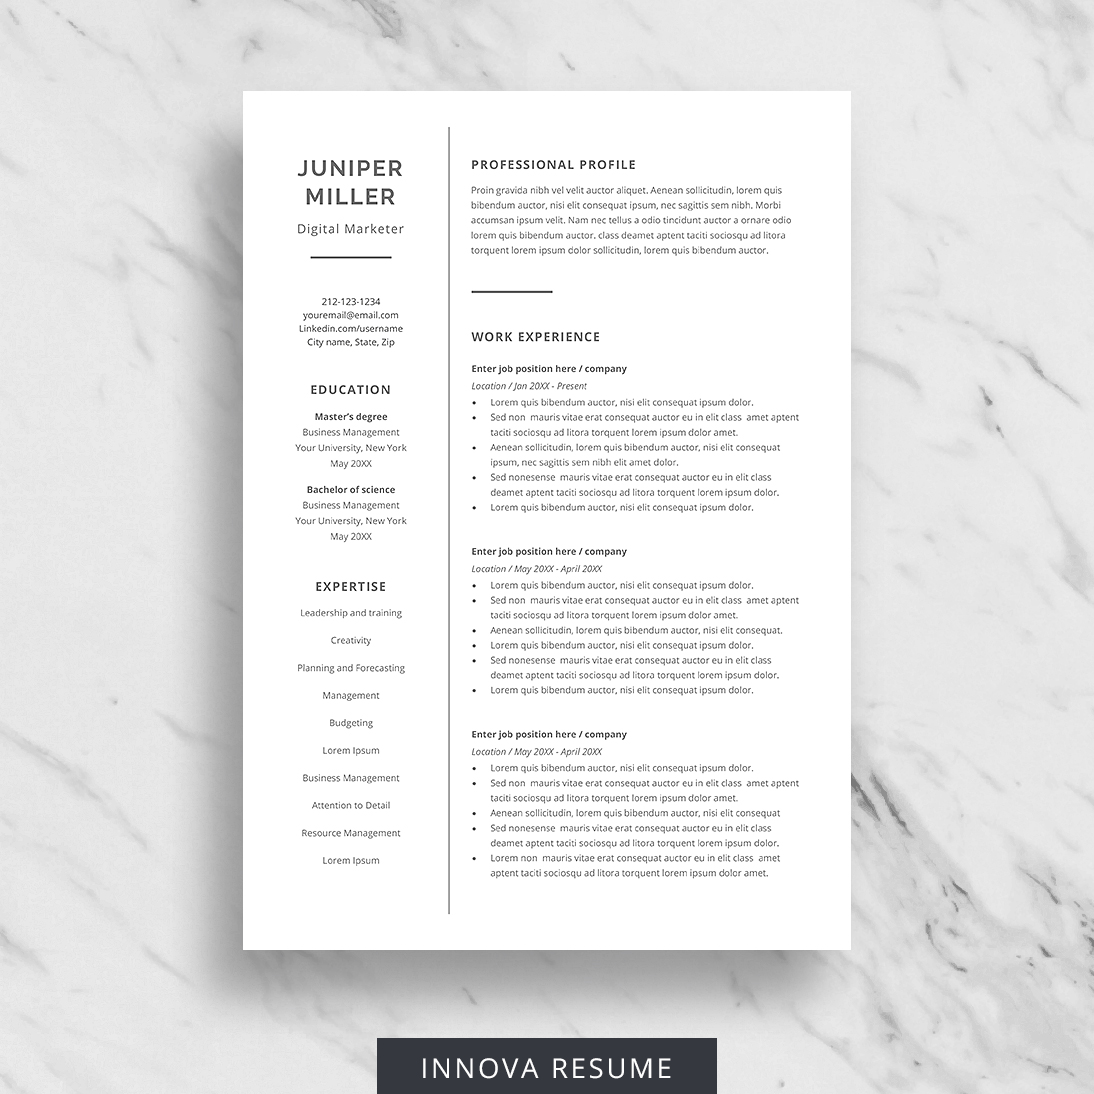 ats-conscious-resume-template-innova-resume